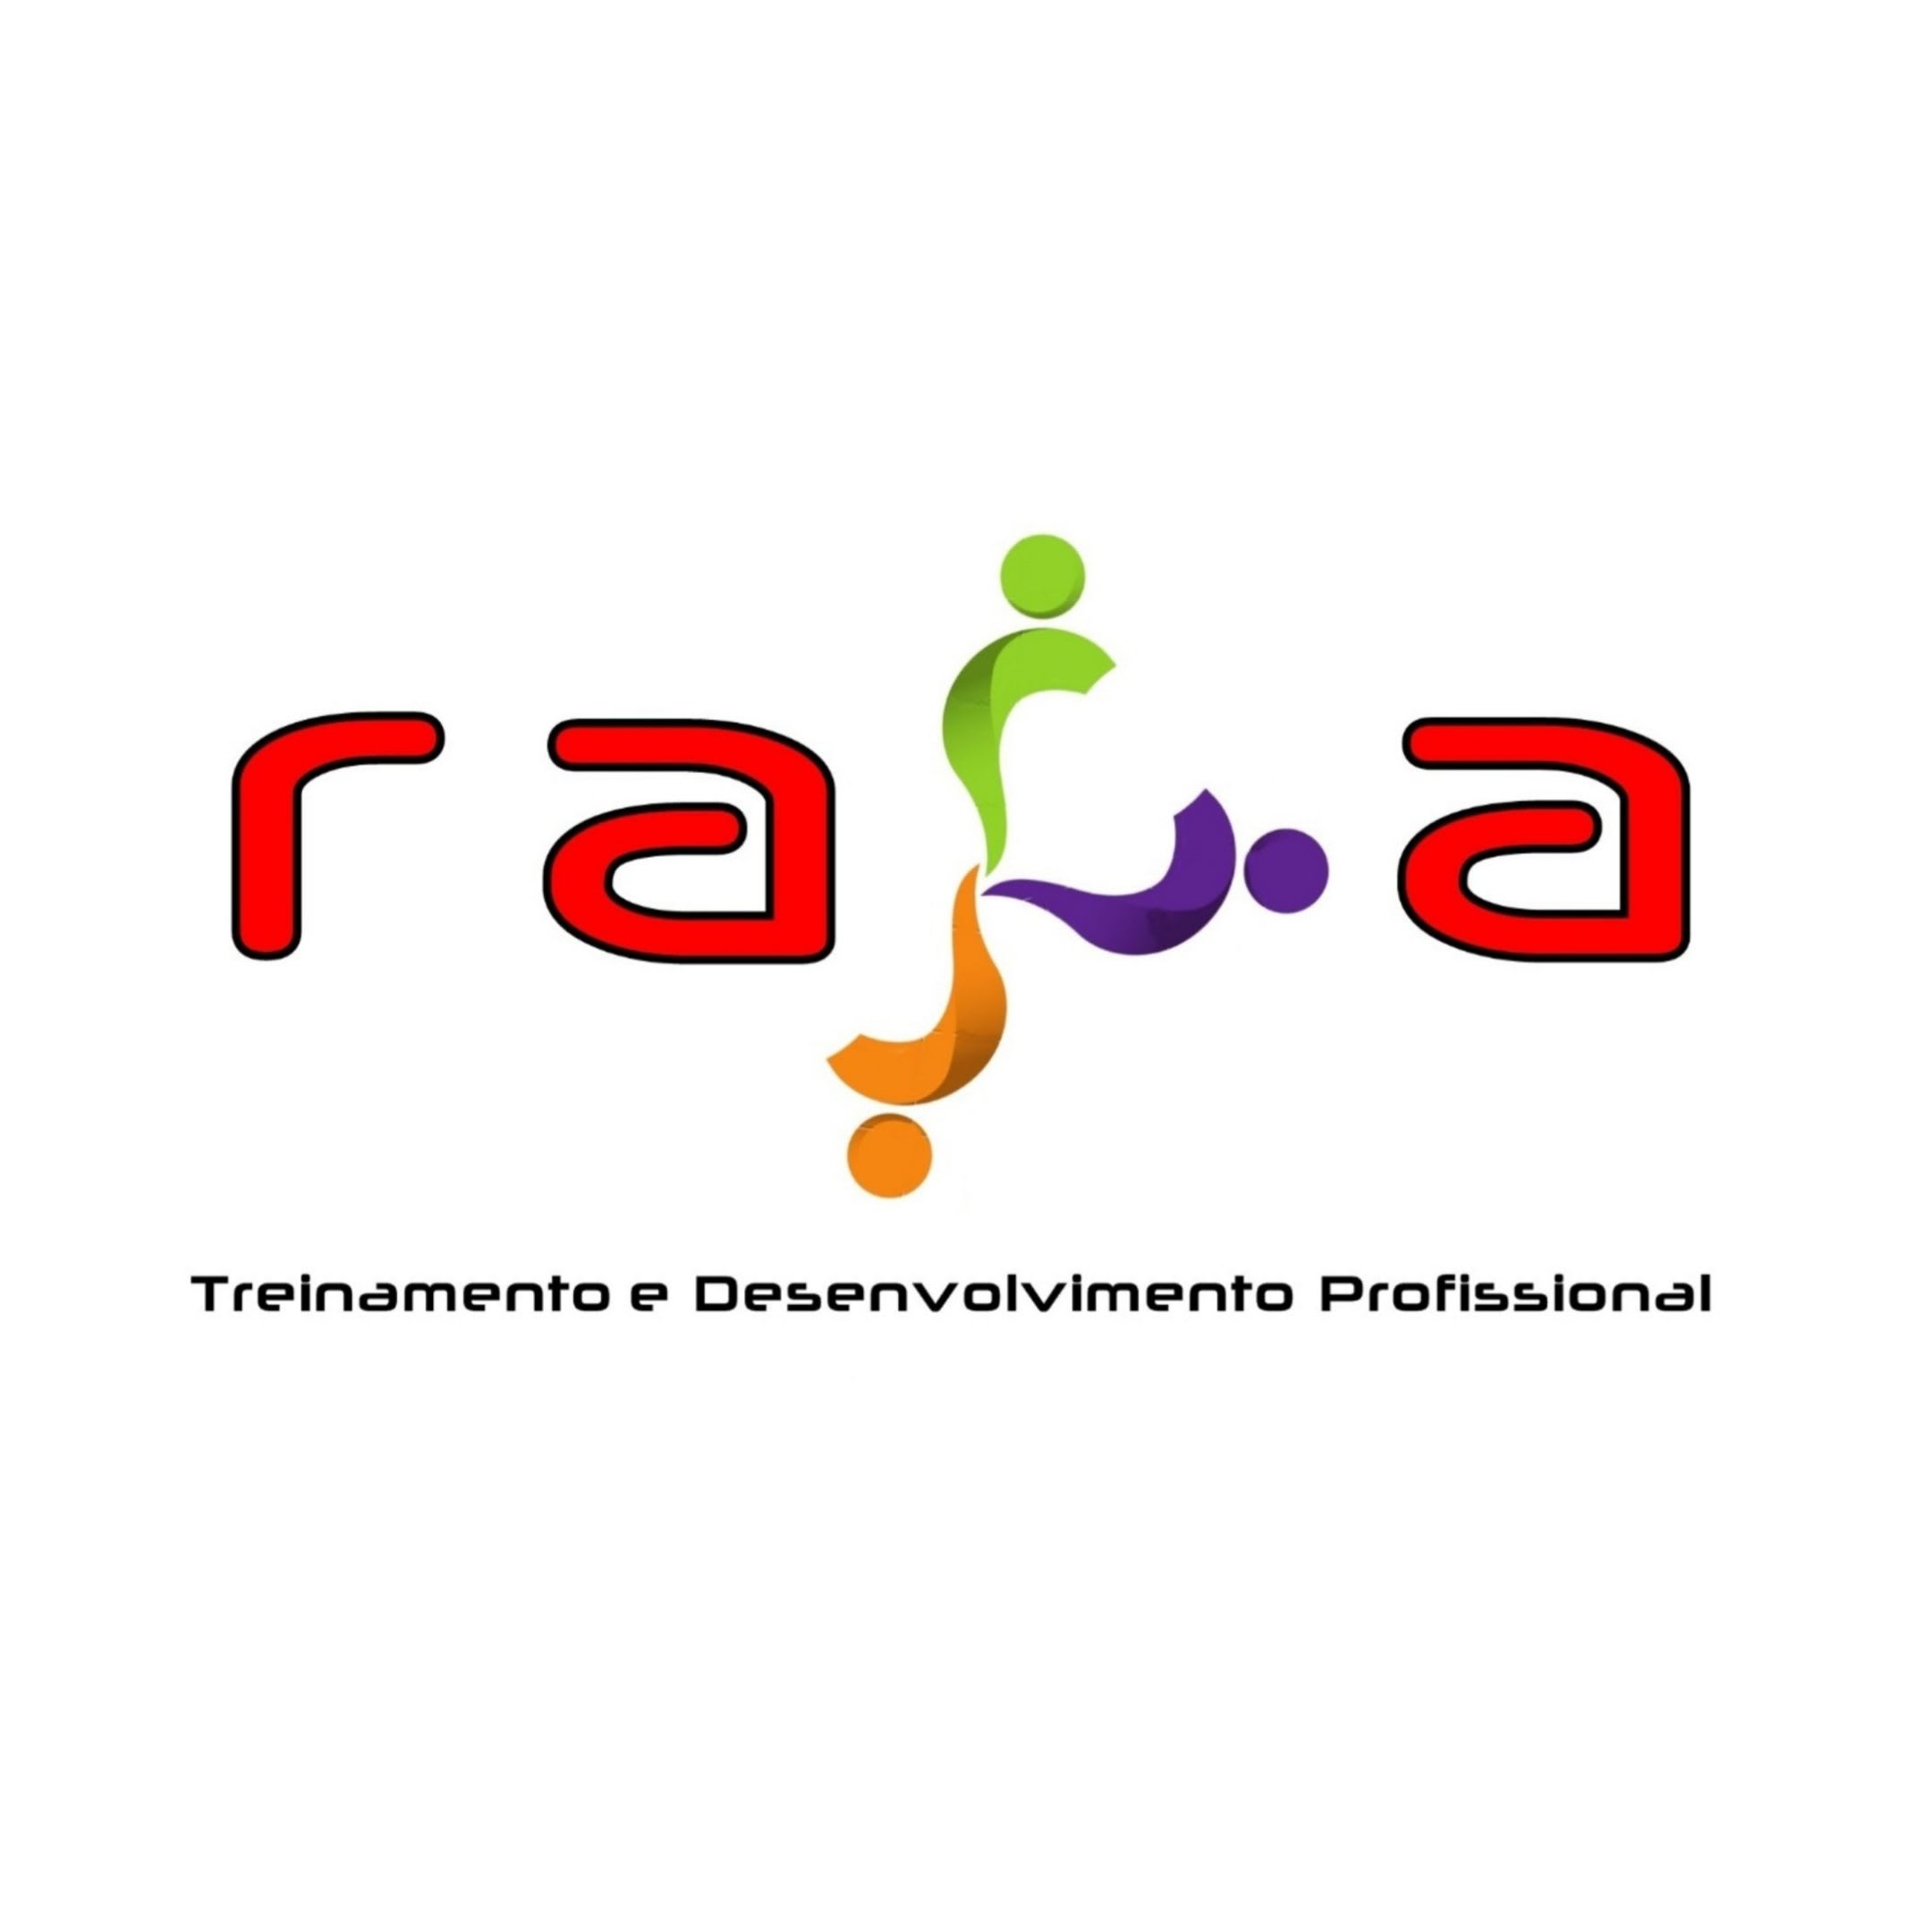 Rafa Treinamento e Desenvolvimento Profissional